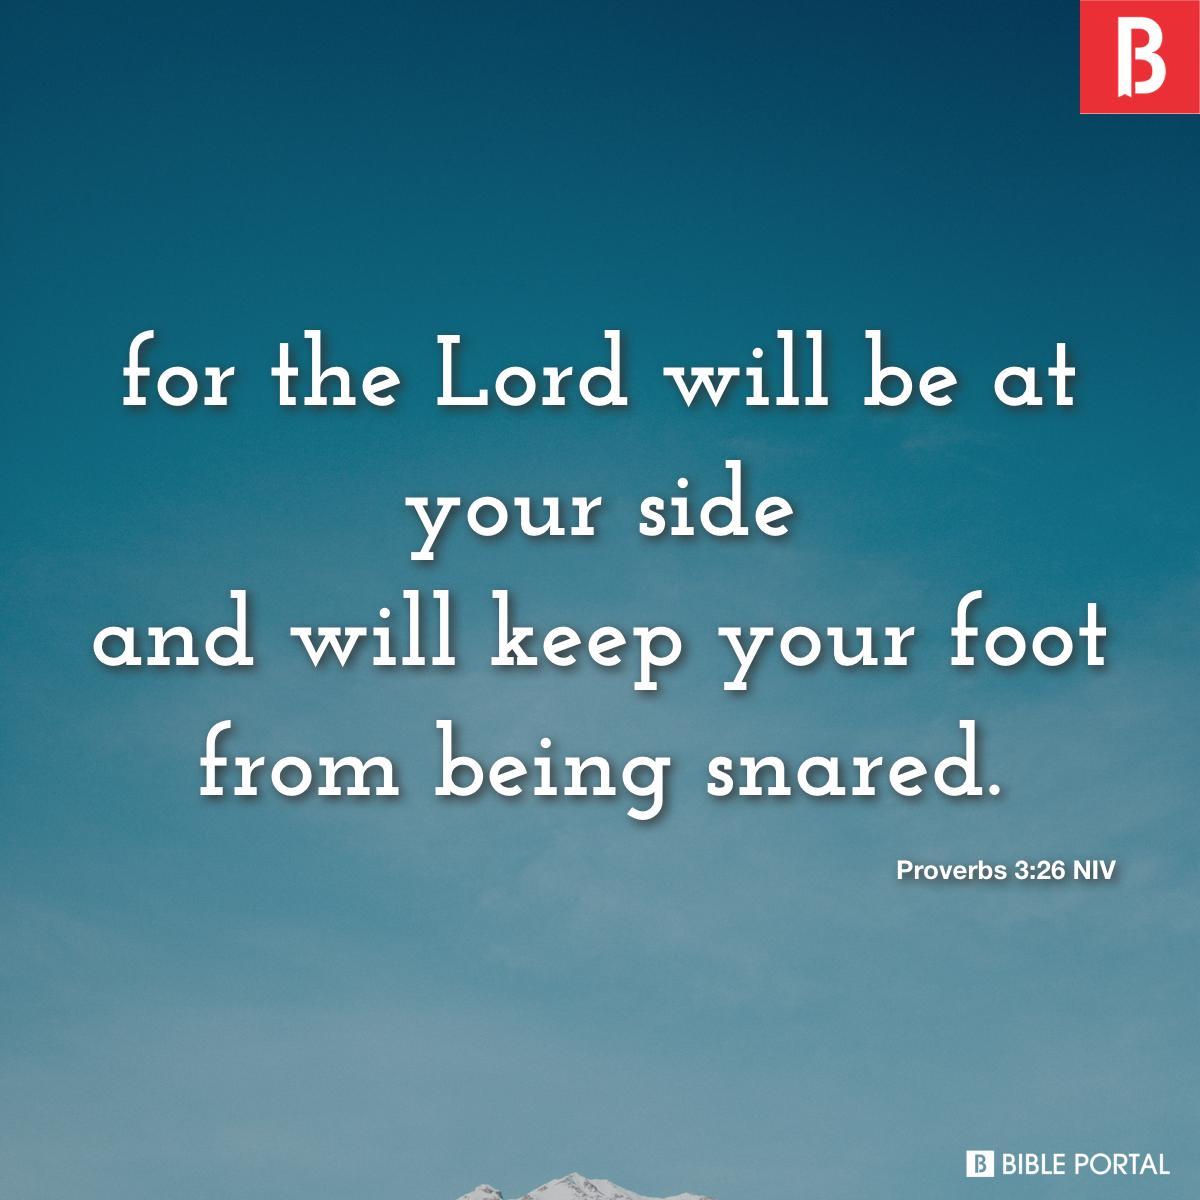 Proverbs 3:26 NIV